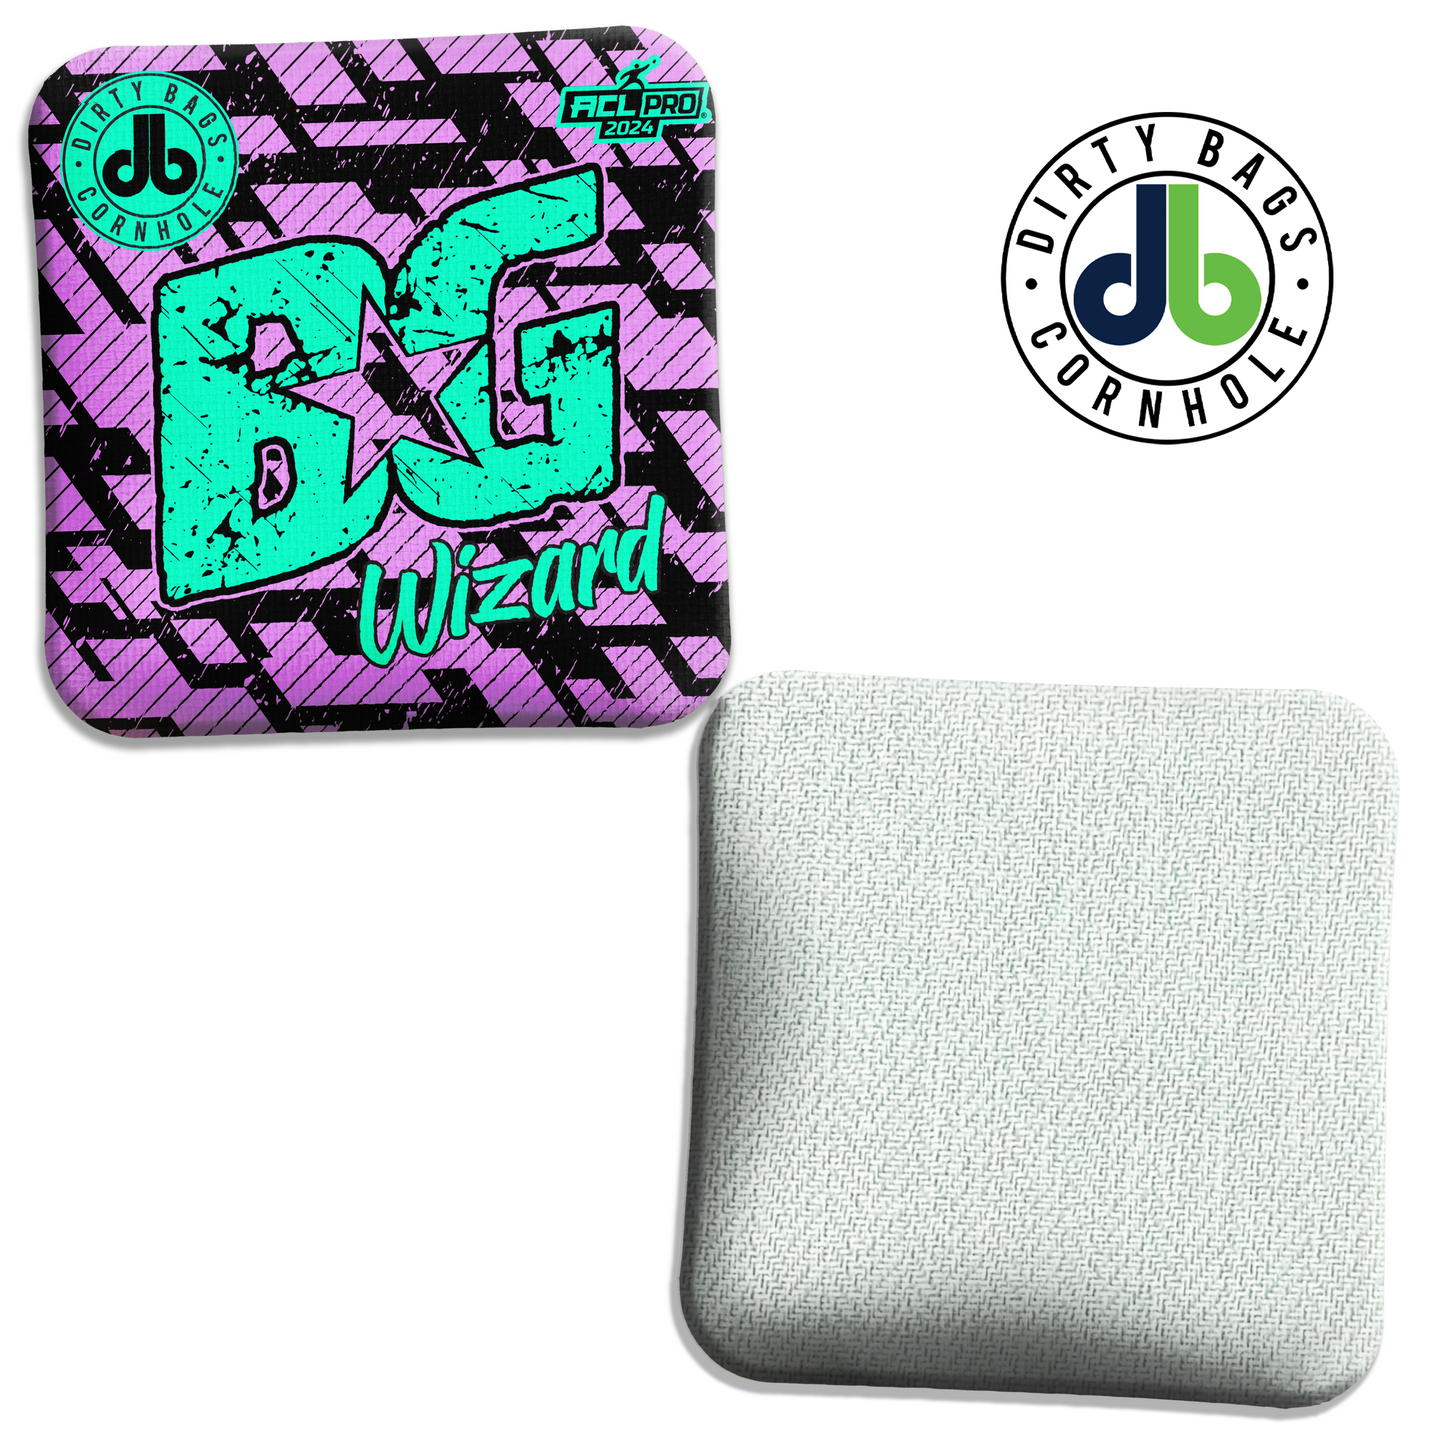 BG Cornhole Bags - Abstract Lilac Edition - Multiple Bag Types